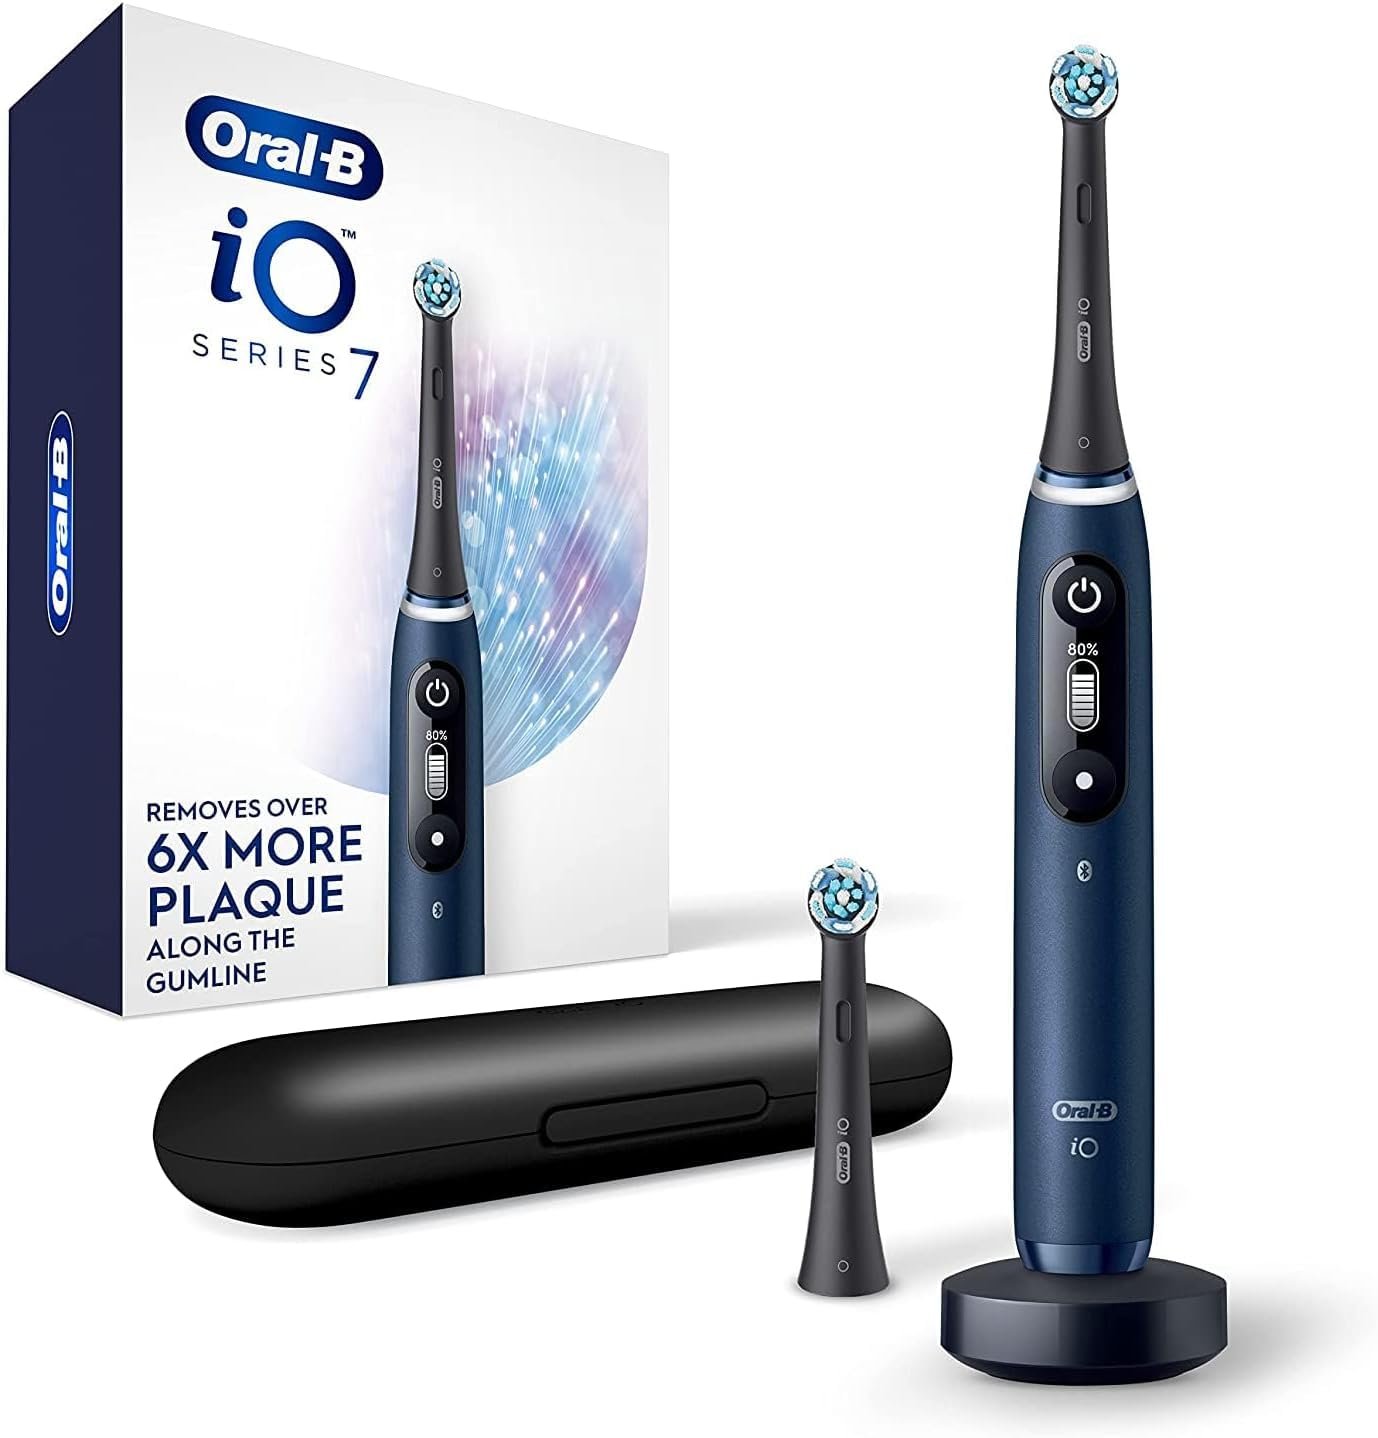 Oral-B iO Series 7G Electric Toothbrush with Brush Head, Black Onyx